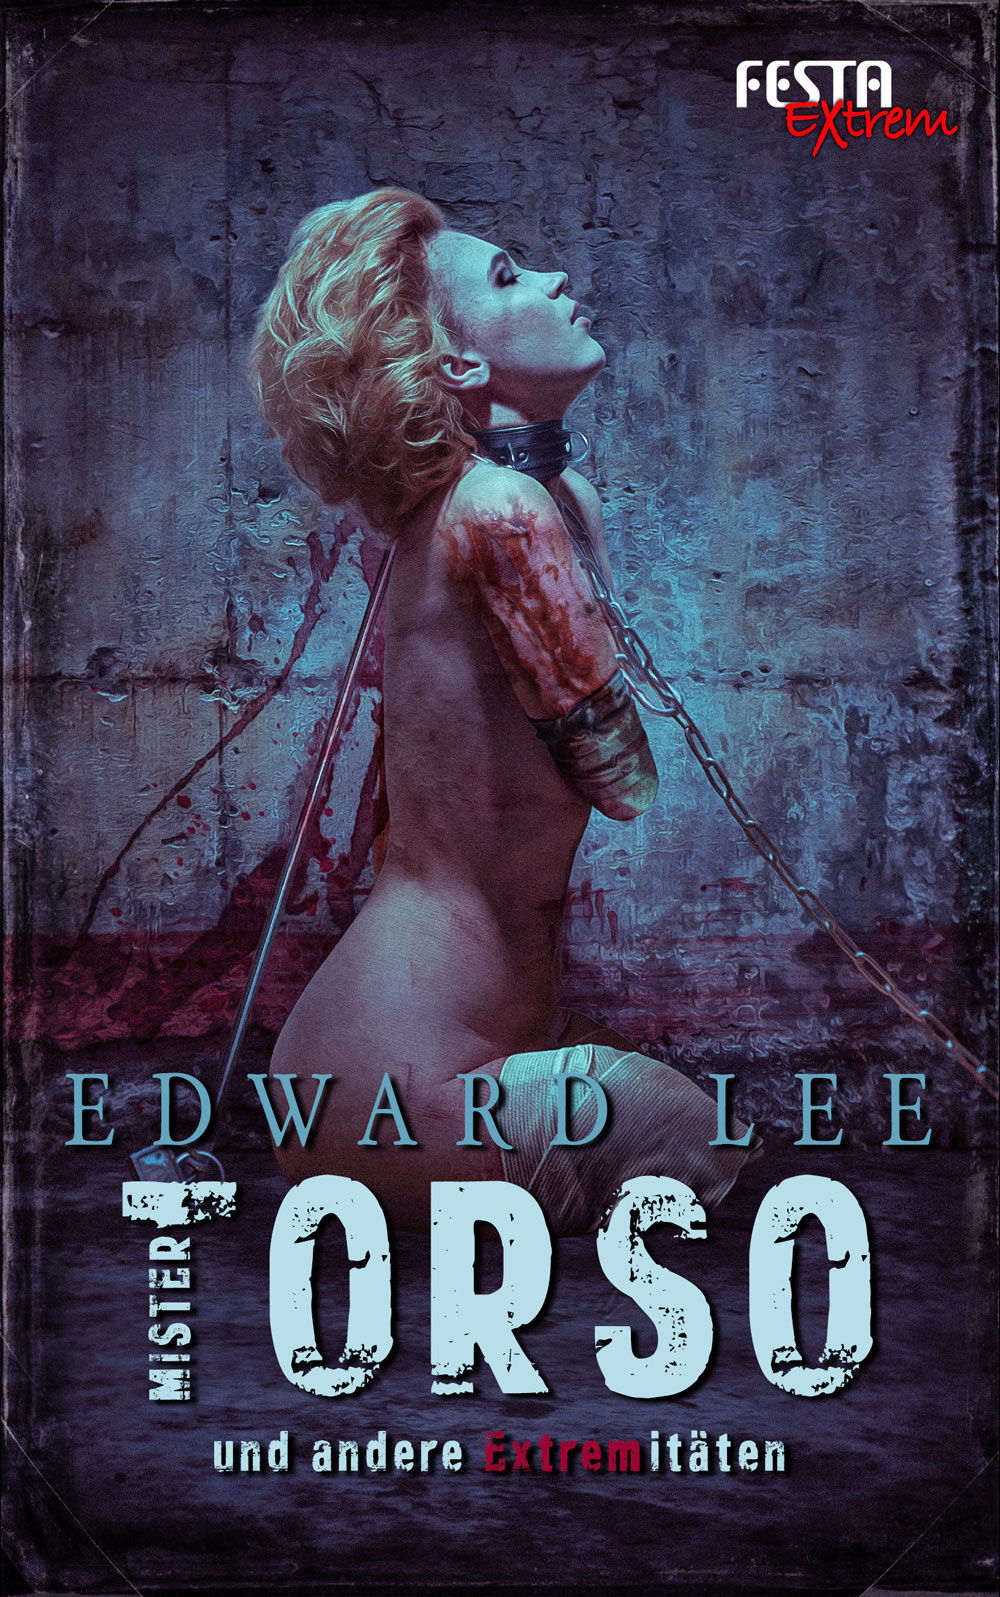 *Werbung* Rezension zu Edward Lee's "Mister Torso" 10